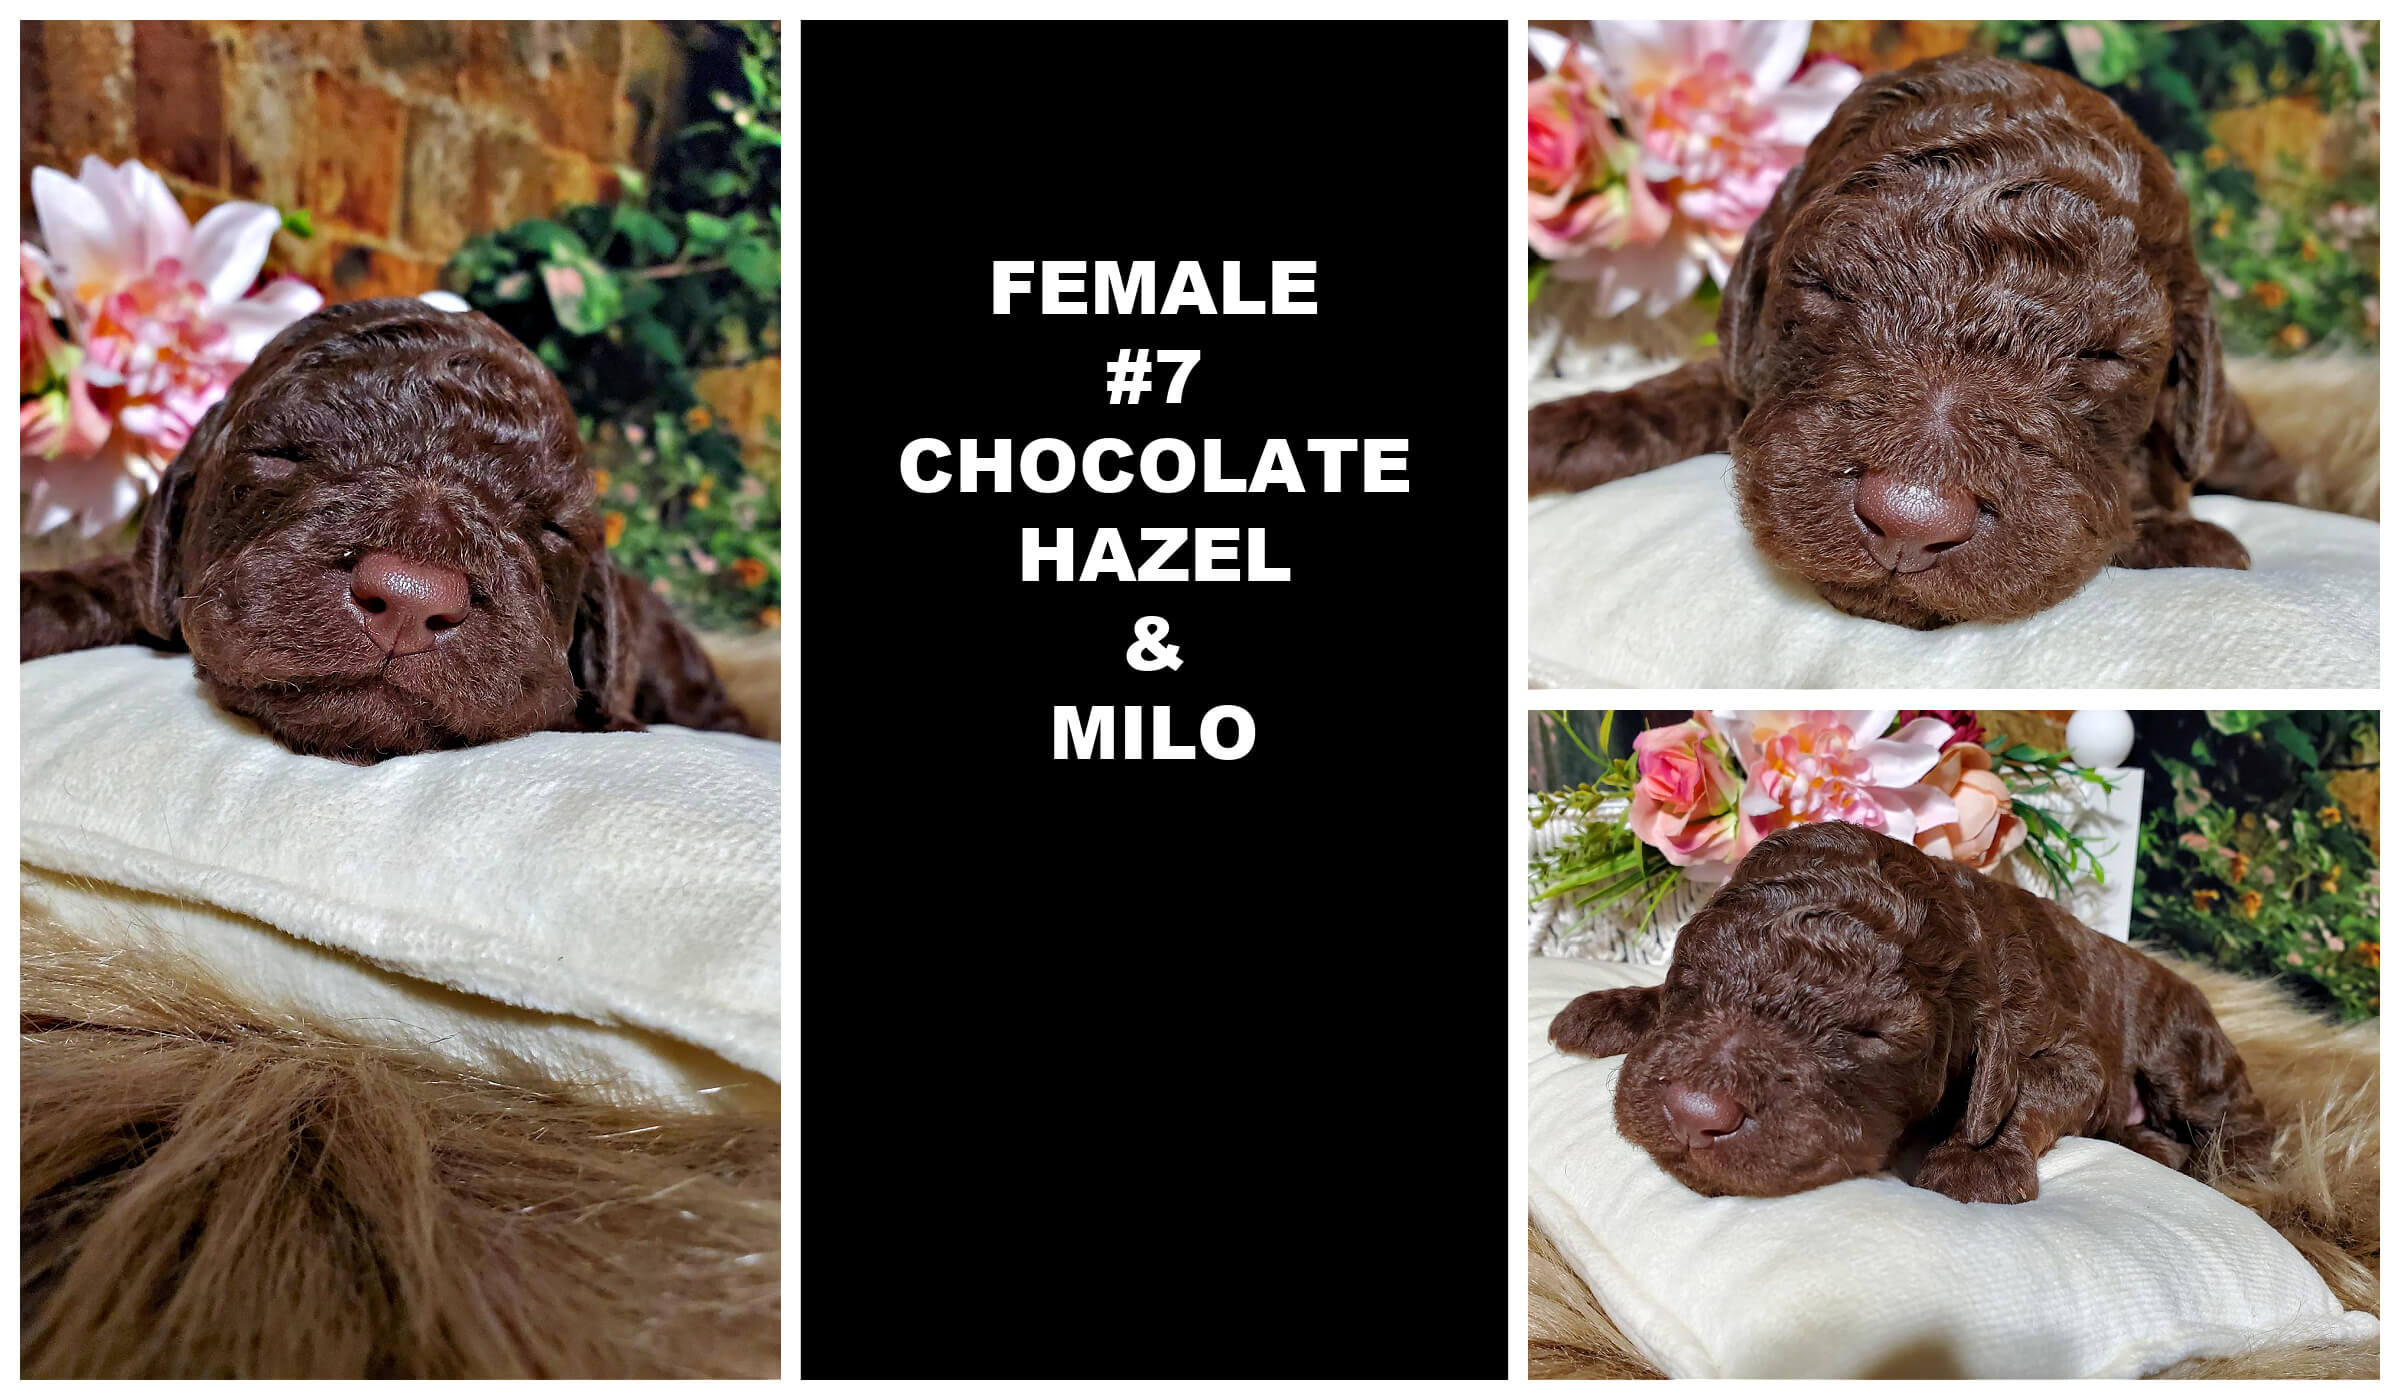 FEMALE #7 CHOCOLATE HAZEL & MILO.